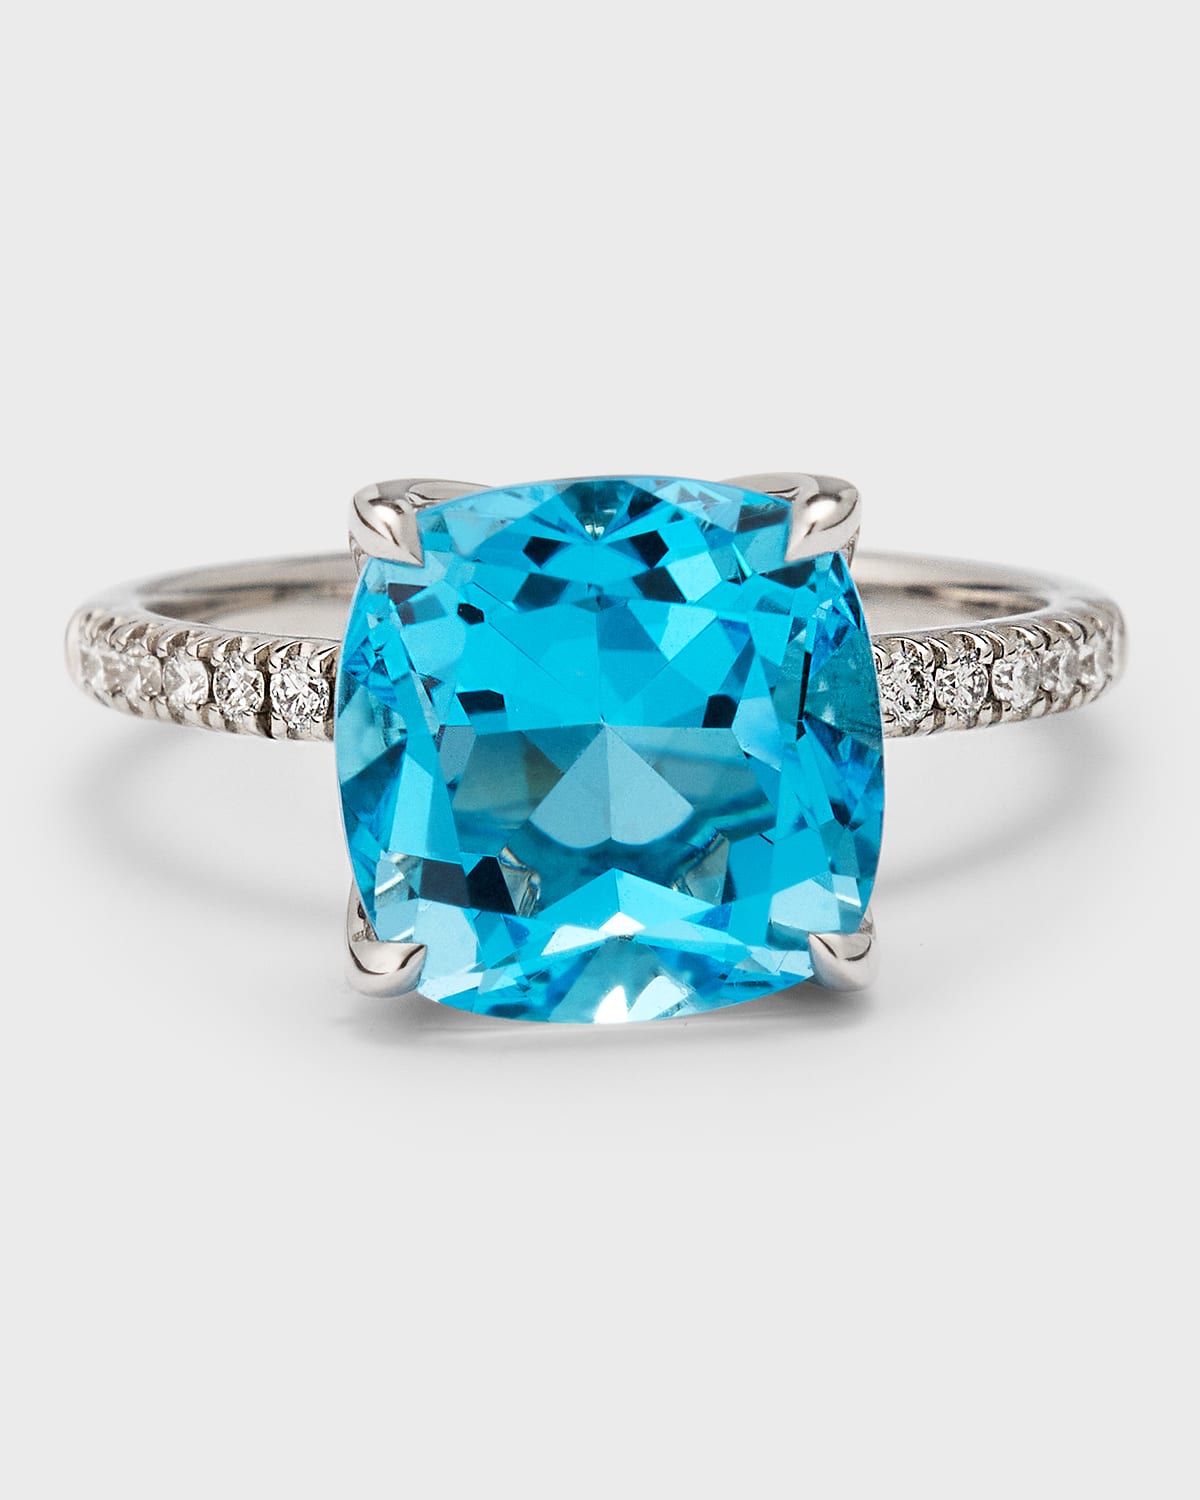 18K White Gold Swiss Blue Topaz Statement Ring with Diamonds, Size 6